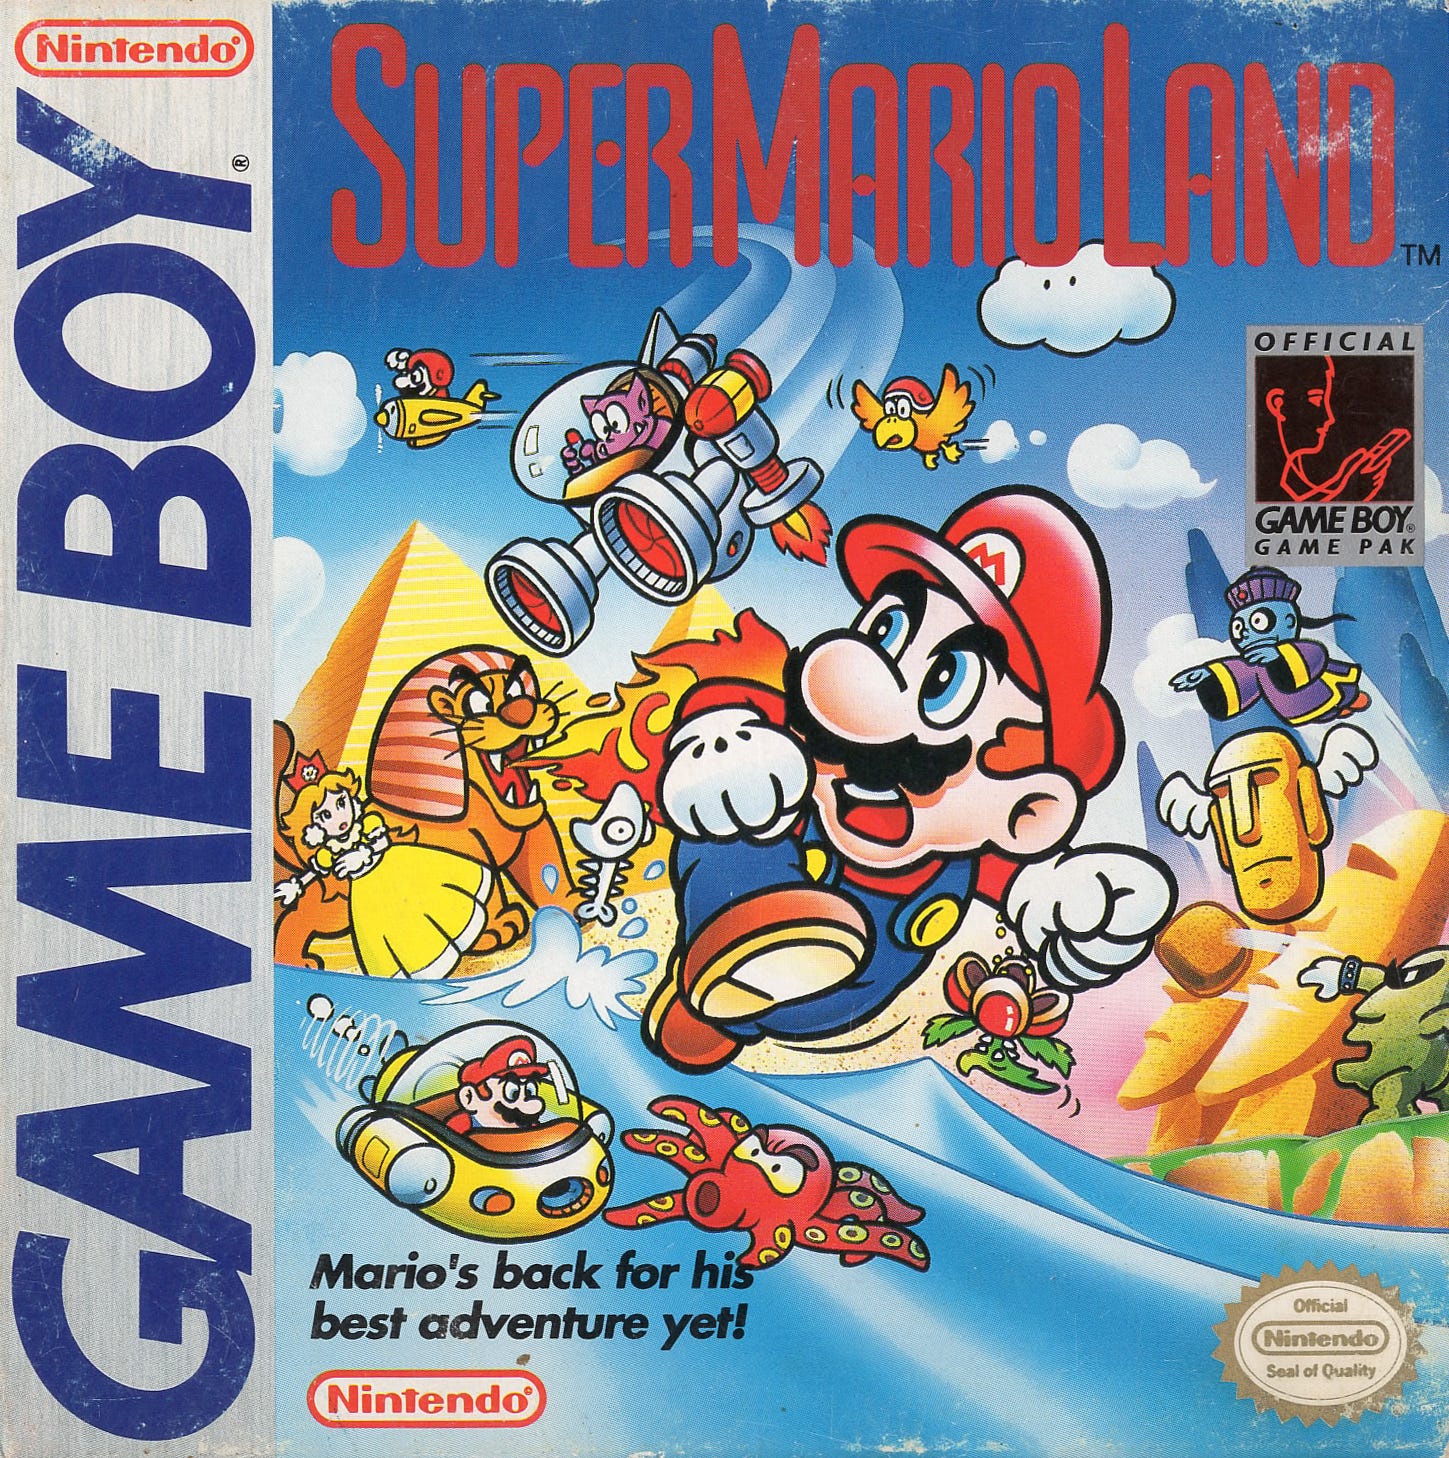 Photo of the Super Mario Land box art